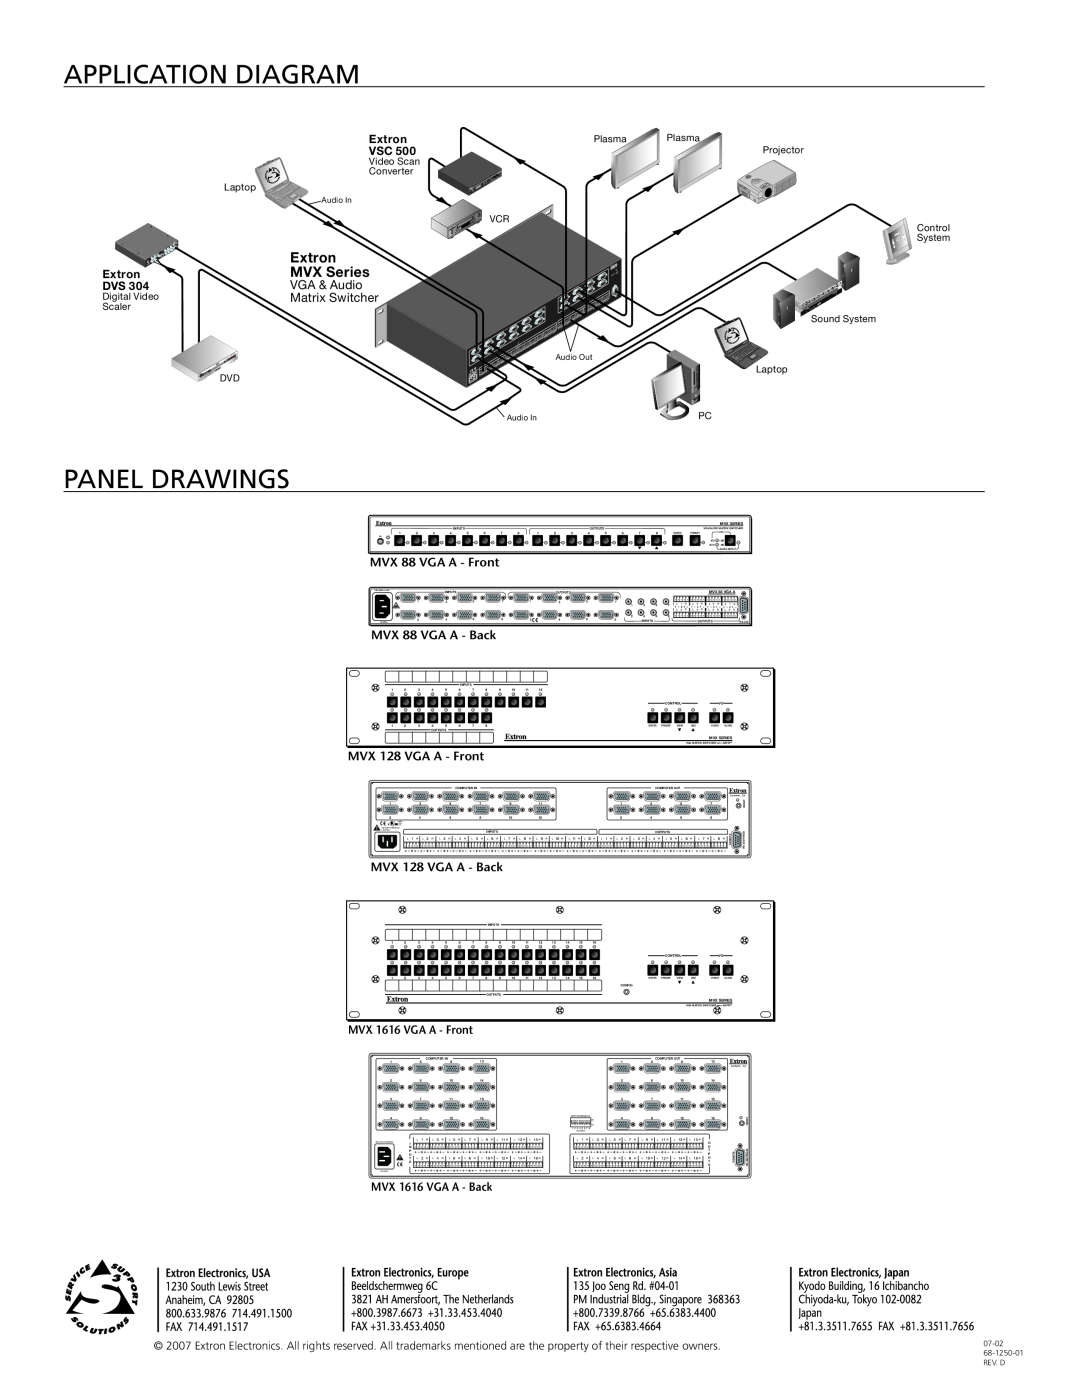 Extron electronic MVX 1616 VGA A, MVX 88 VGA A, MVX 128 VGA A manual Application Diagram, Panel drawings, Extron, MVX Series 